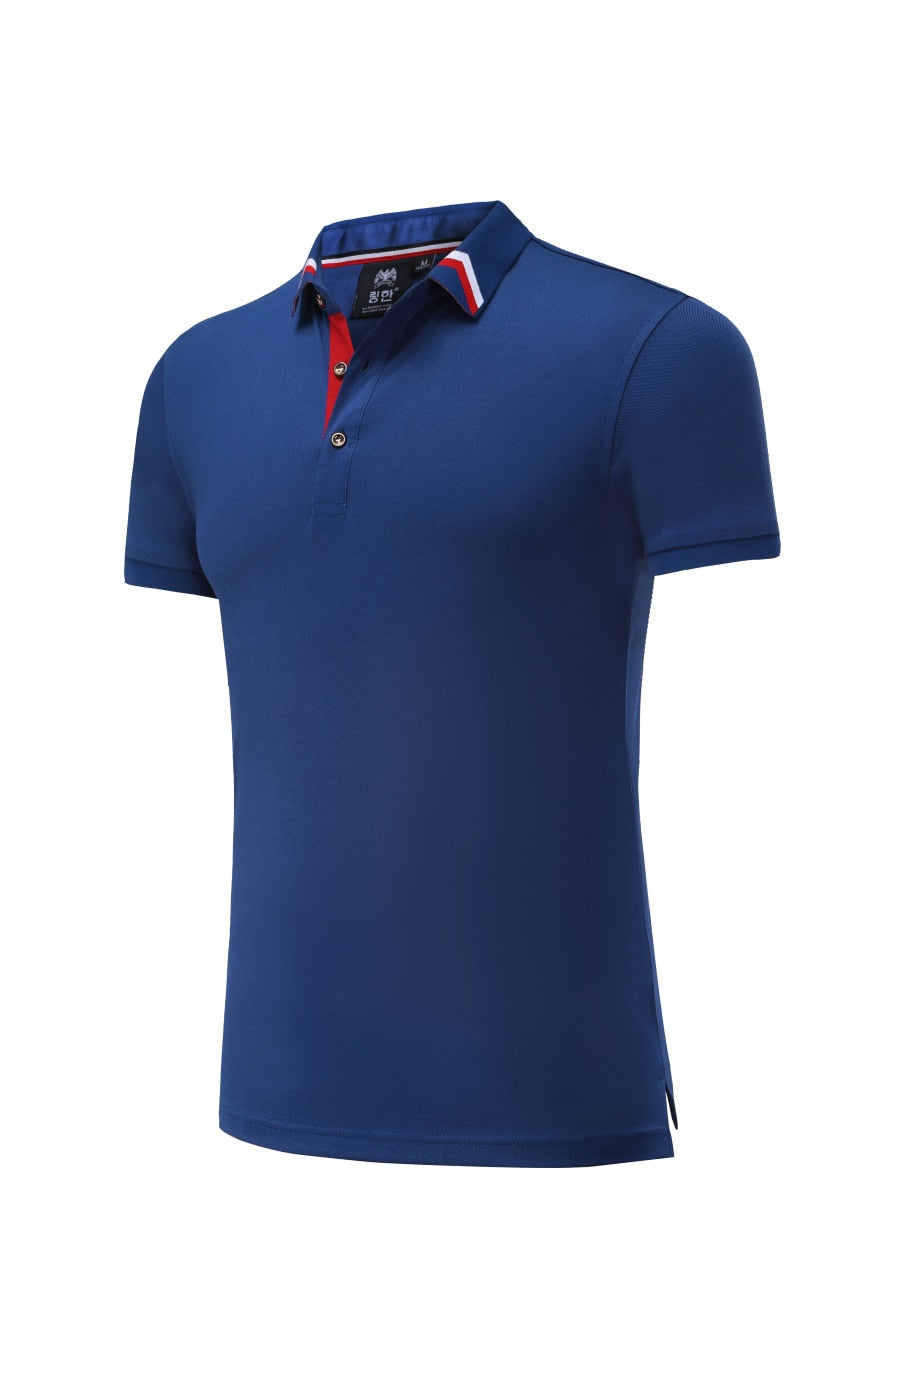 Unisex Golf Short Sleeve Breathable Tops Golf T shirts Golf wear Tennis Training Golf Clothes Sportswear The Clothing Company Sydney